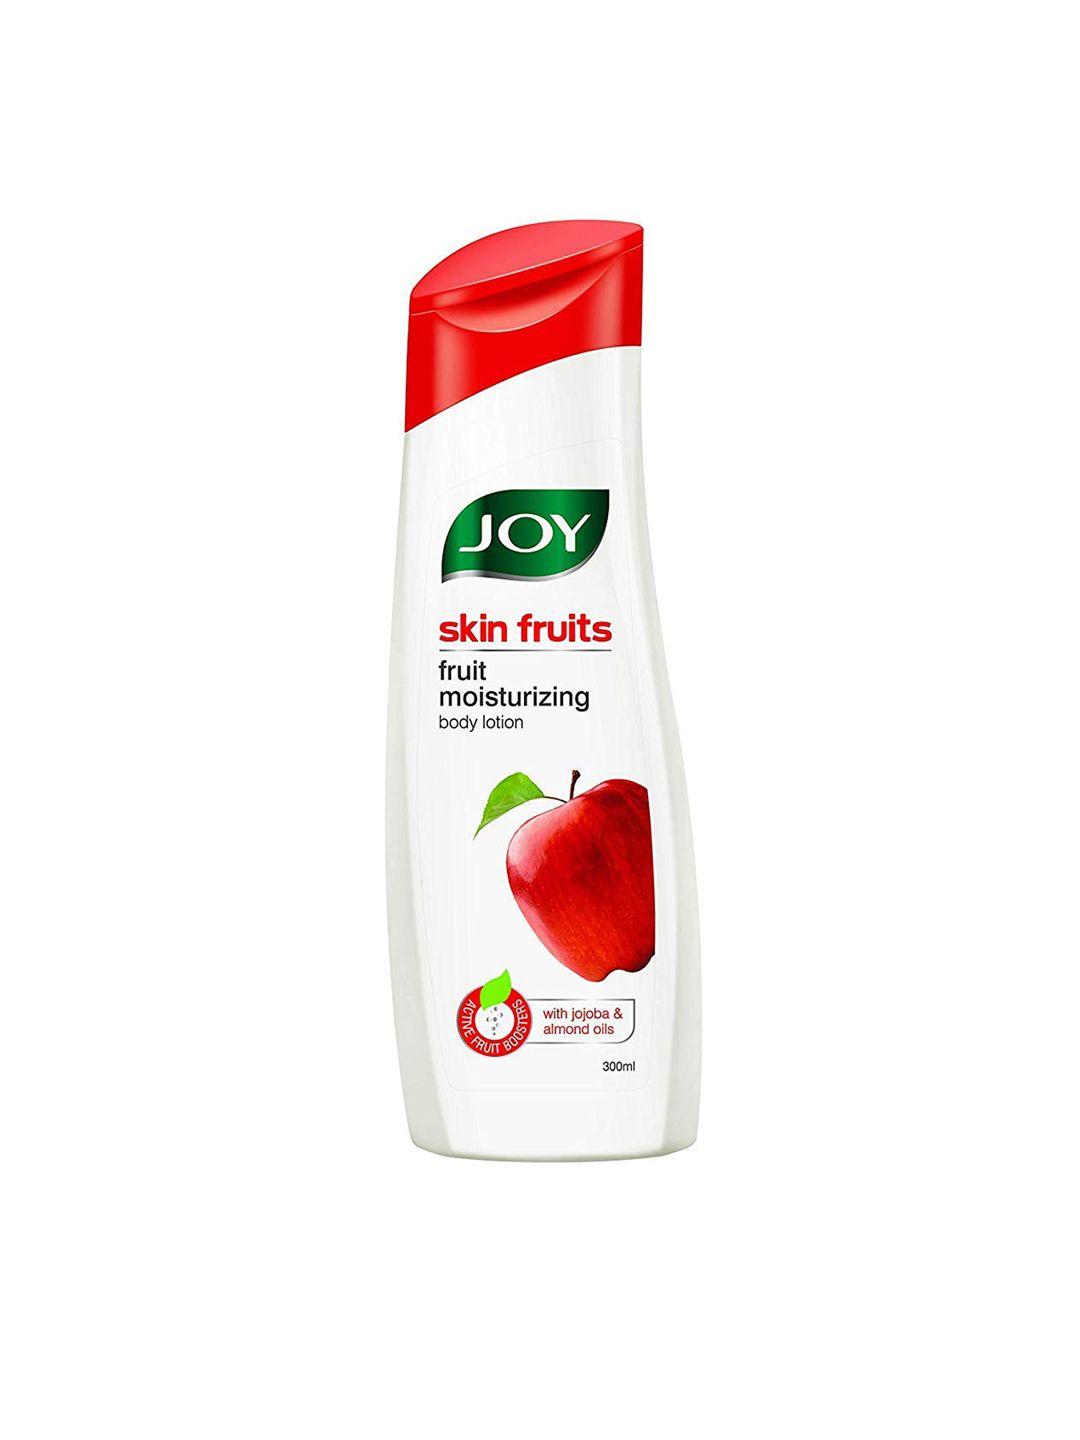 joy skin fruits moisturizing body lotion with jojoba & almond oils - 300 ml